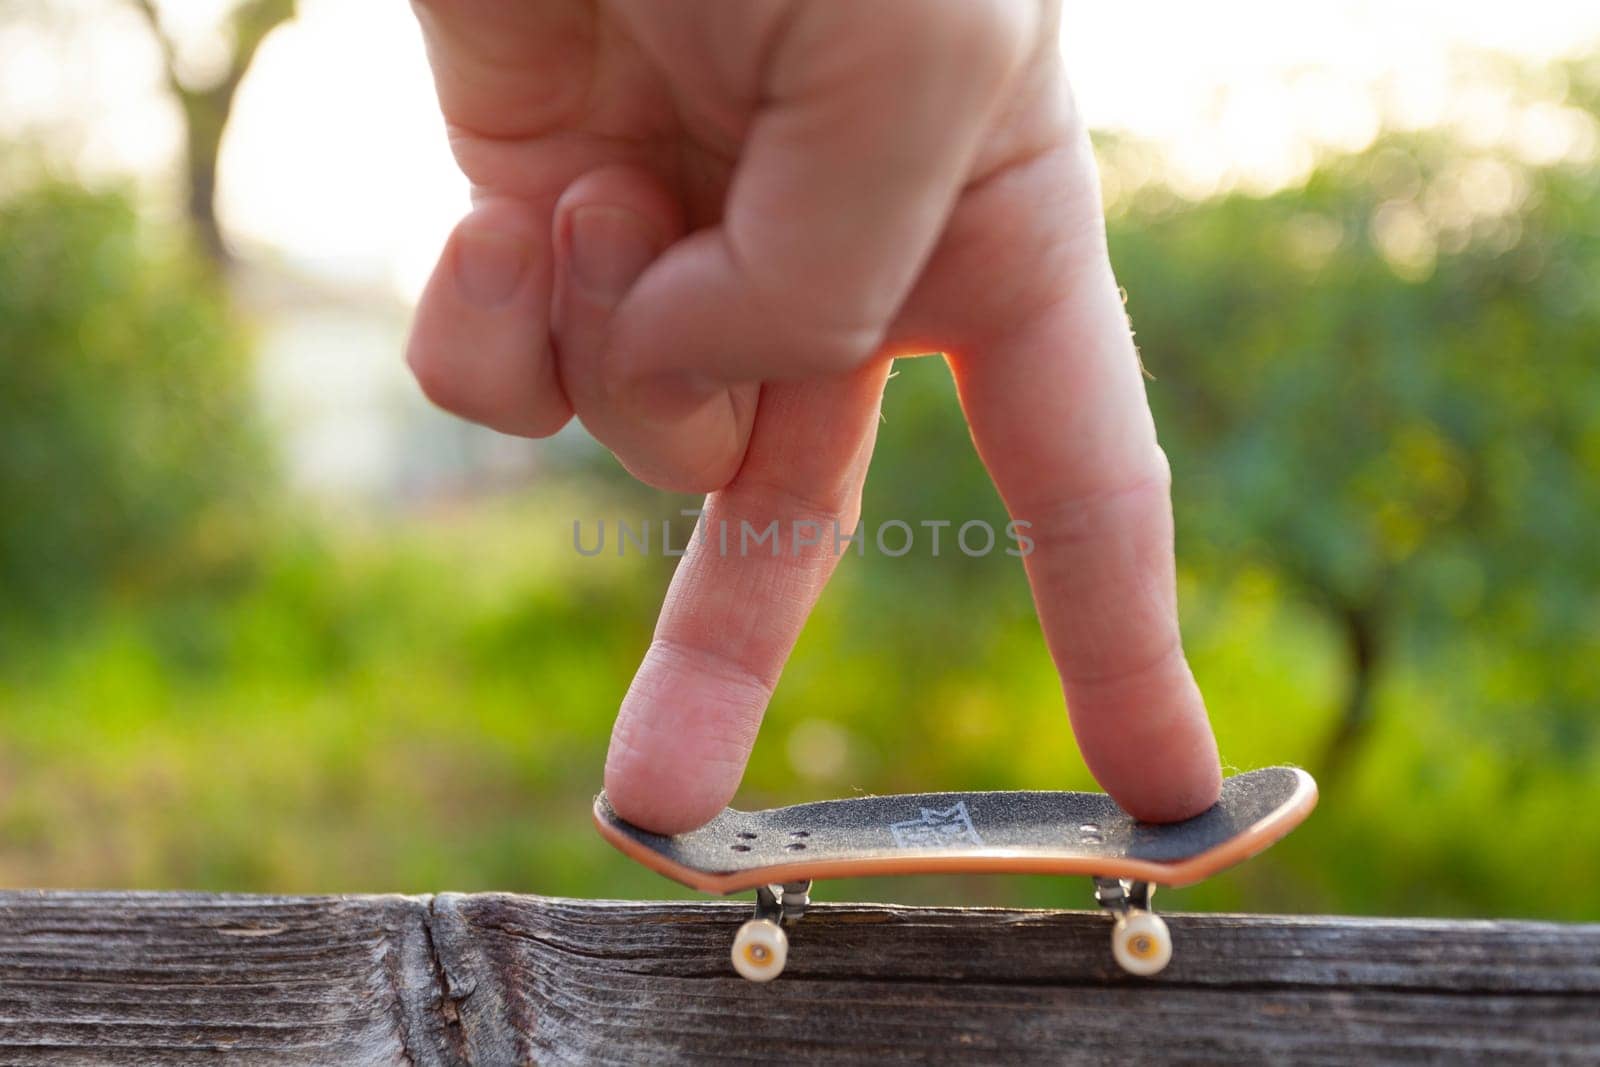 A man's fingers ride a small skateboard like a little man by gordiza